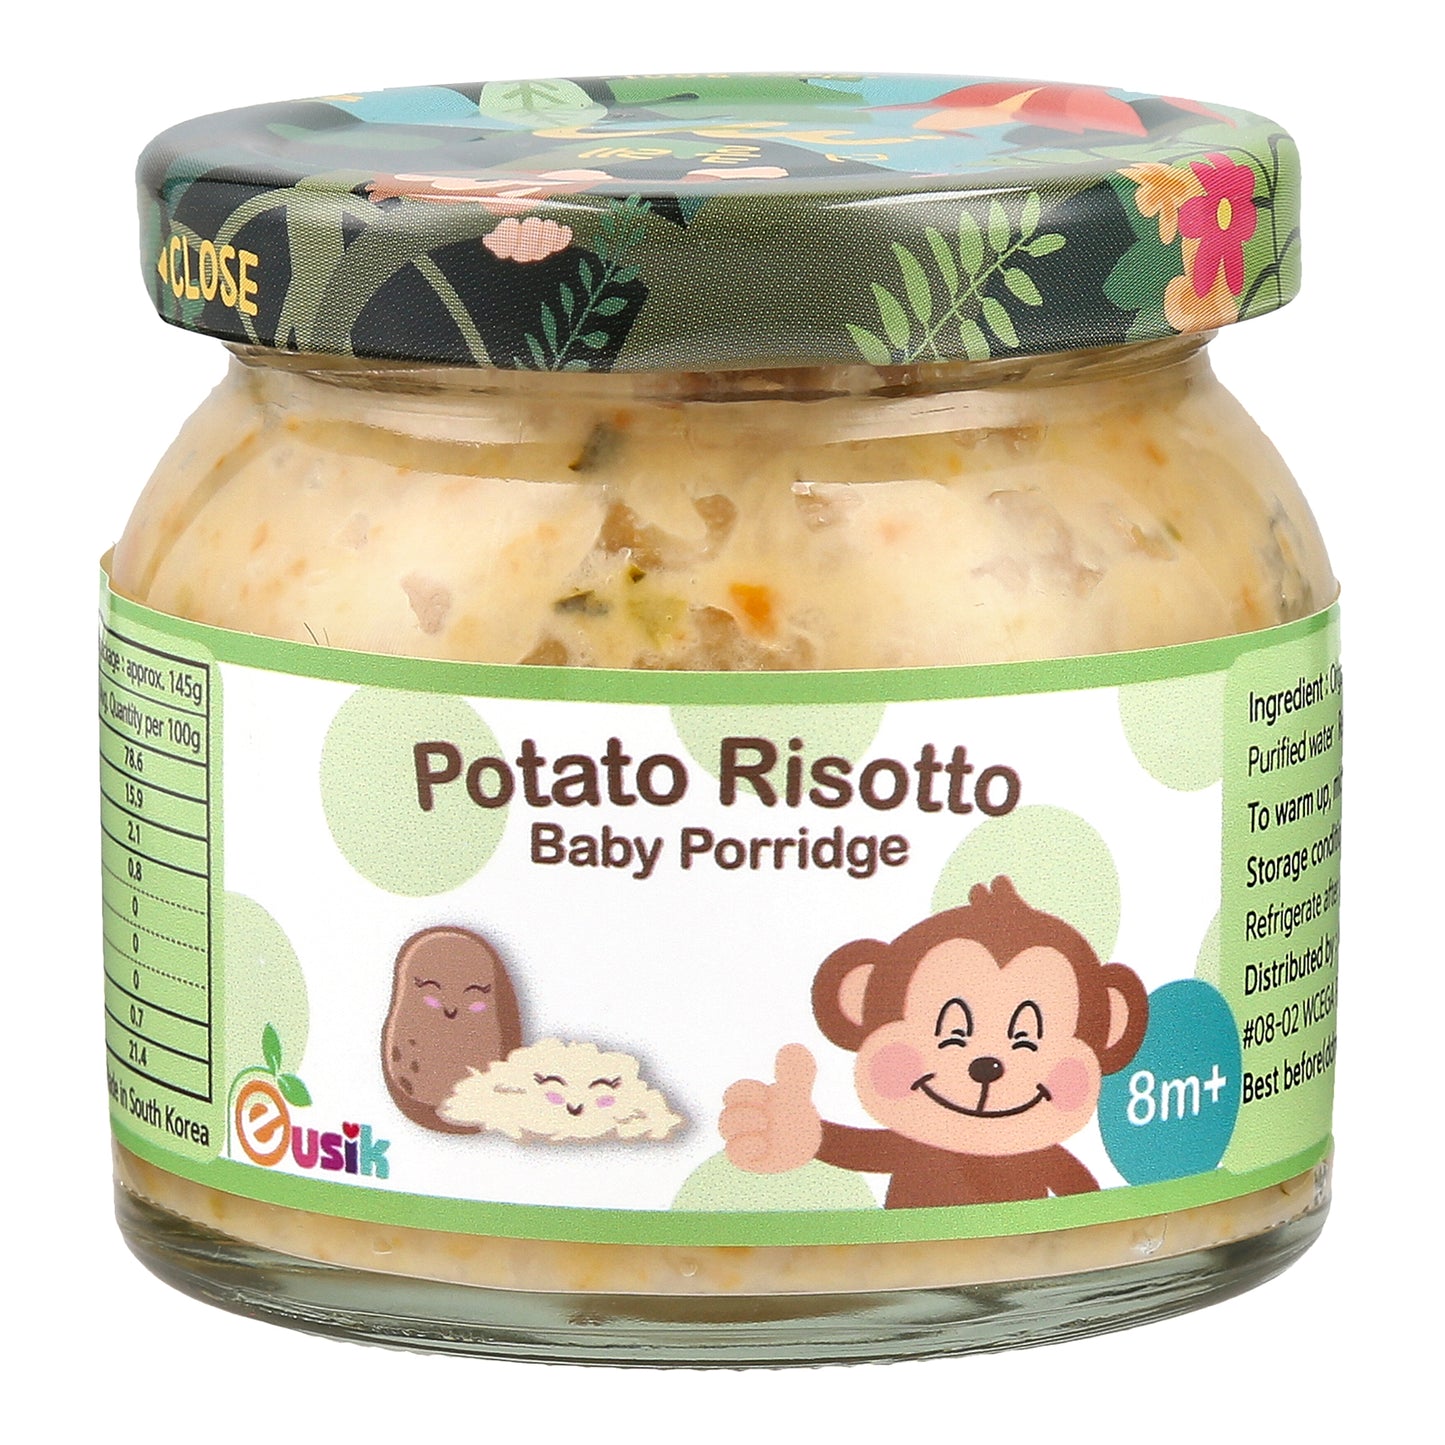 Eusik - 8-Pk Baby Rice Porridge (Potato Risotto) 145g, 8mths+